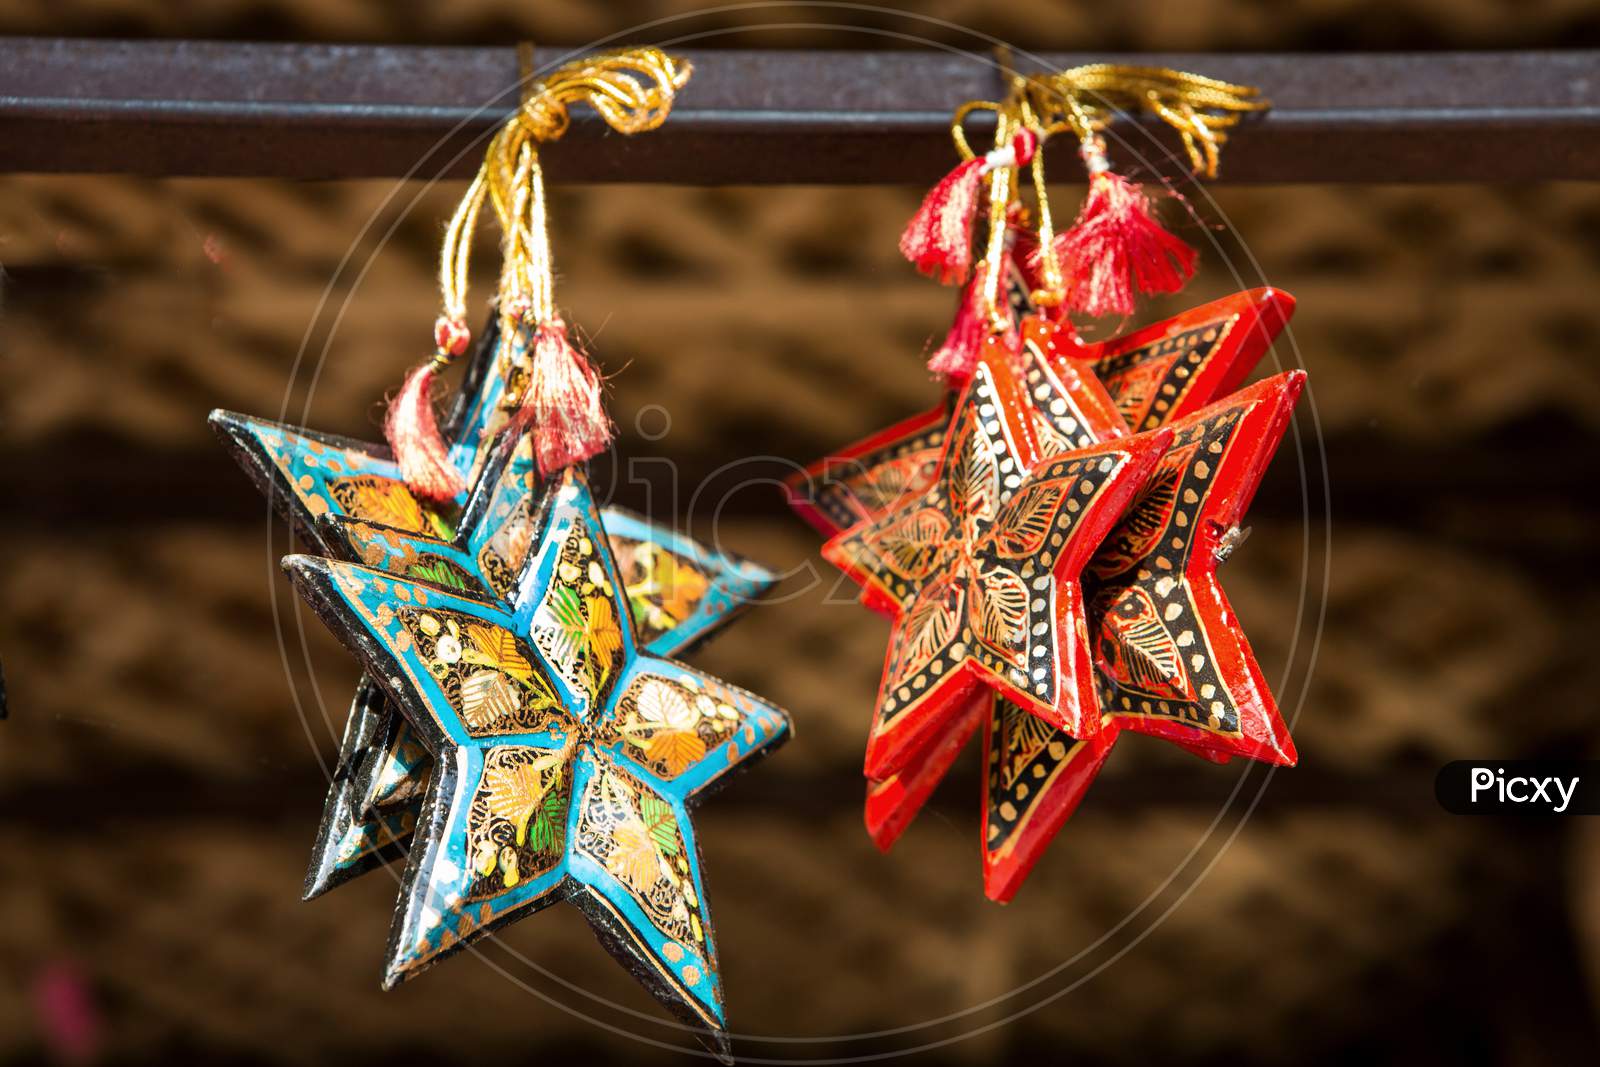 Christmas star decoration